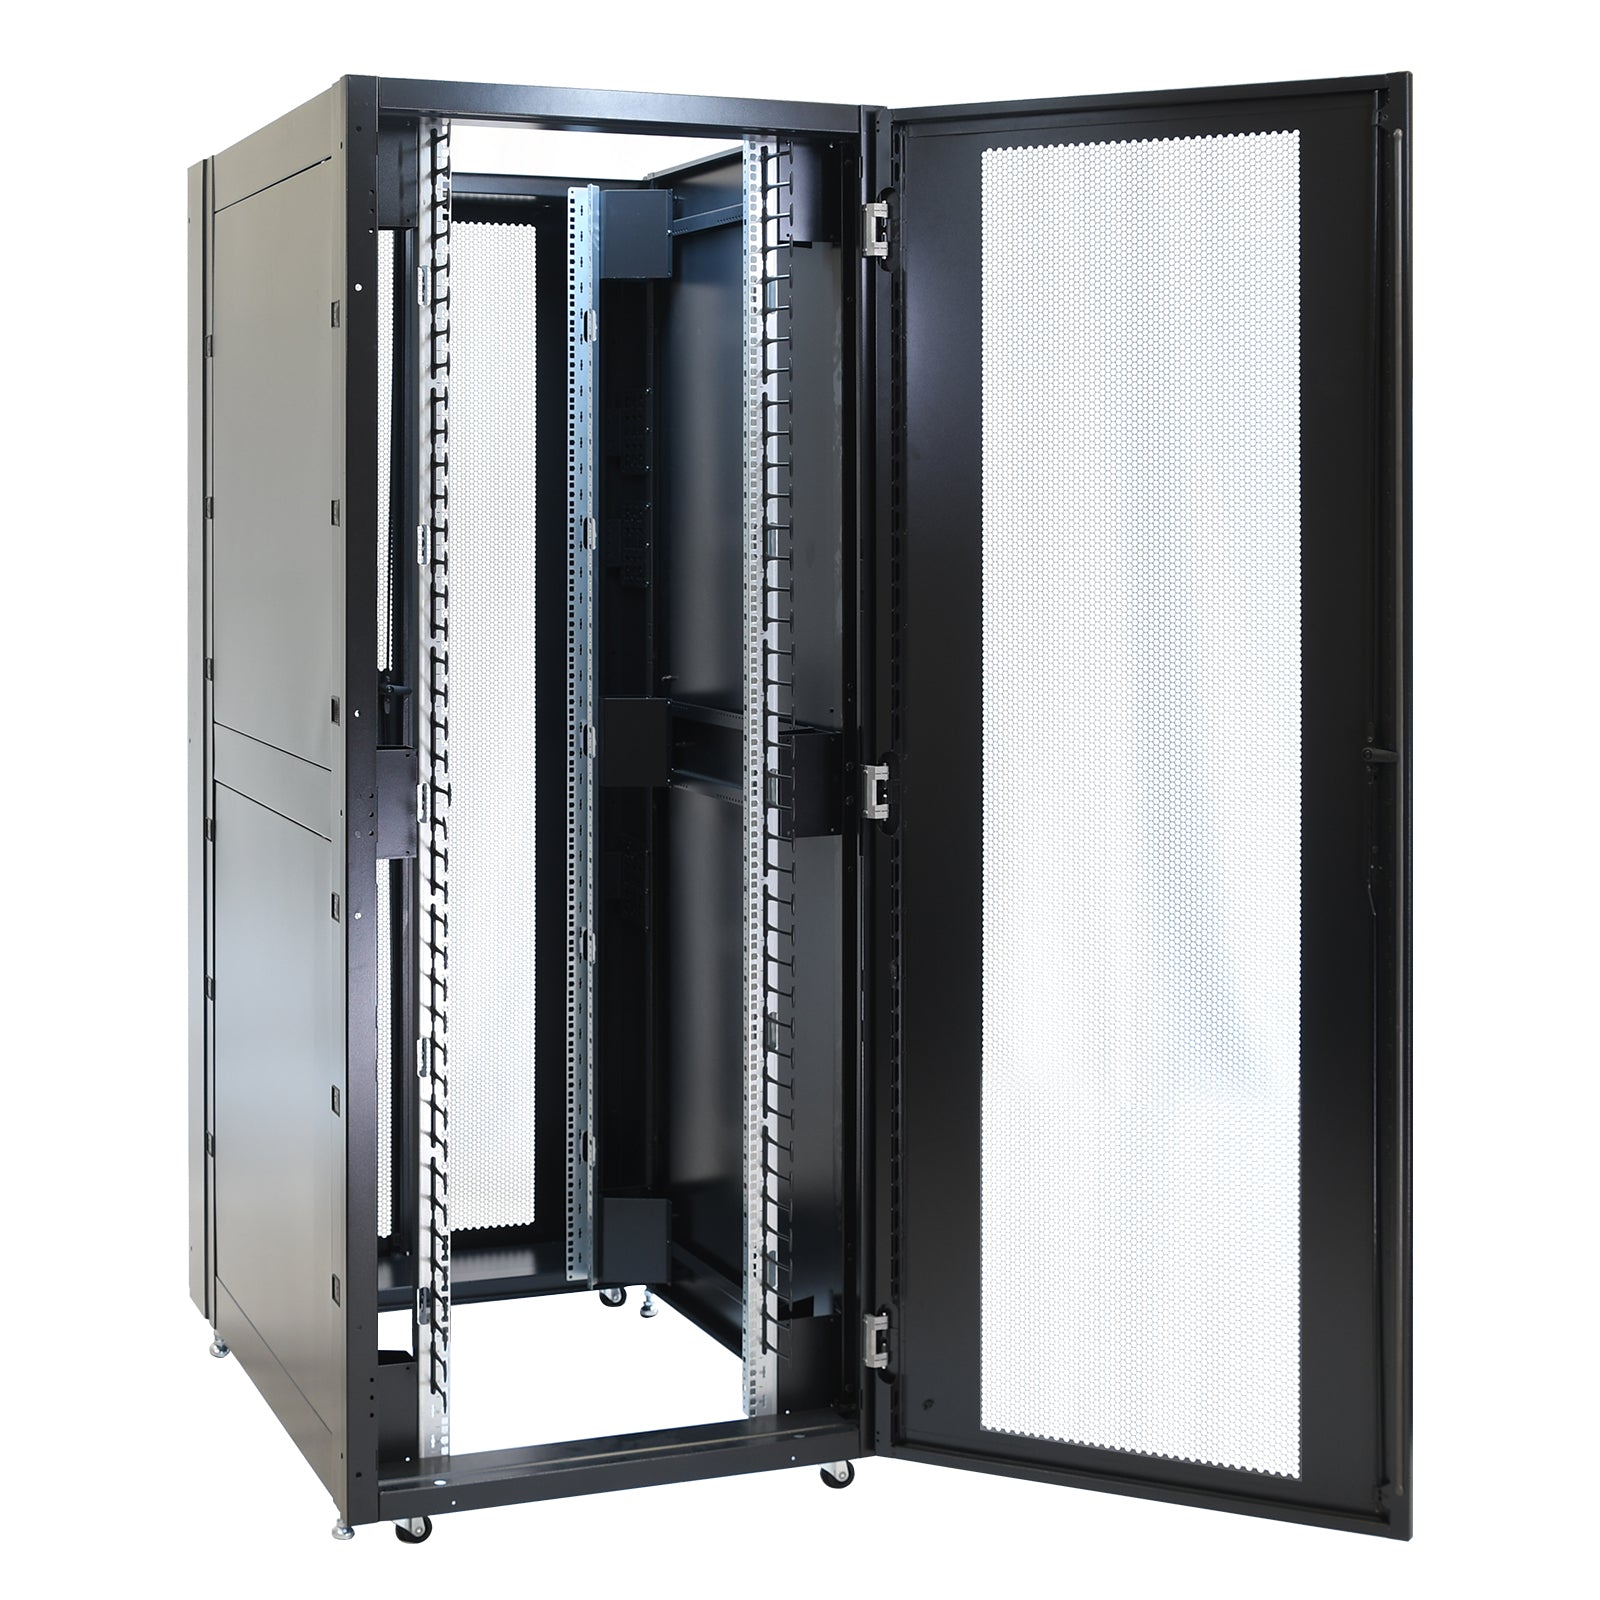 Aeons PF 42U Premium Server Rack Enclosure Cabinet, Extra-Depth Extra-Wide, Secure Modular Data Center